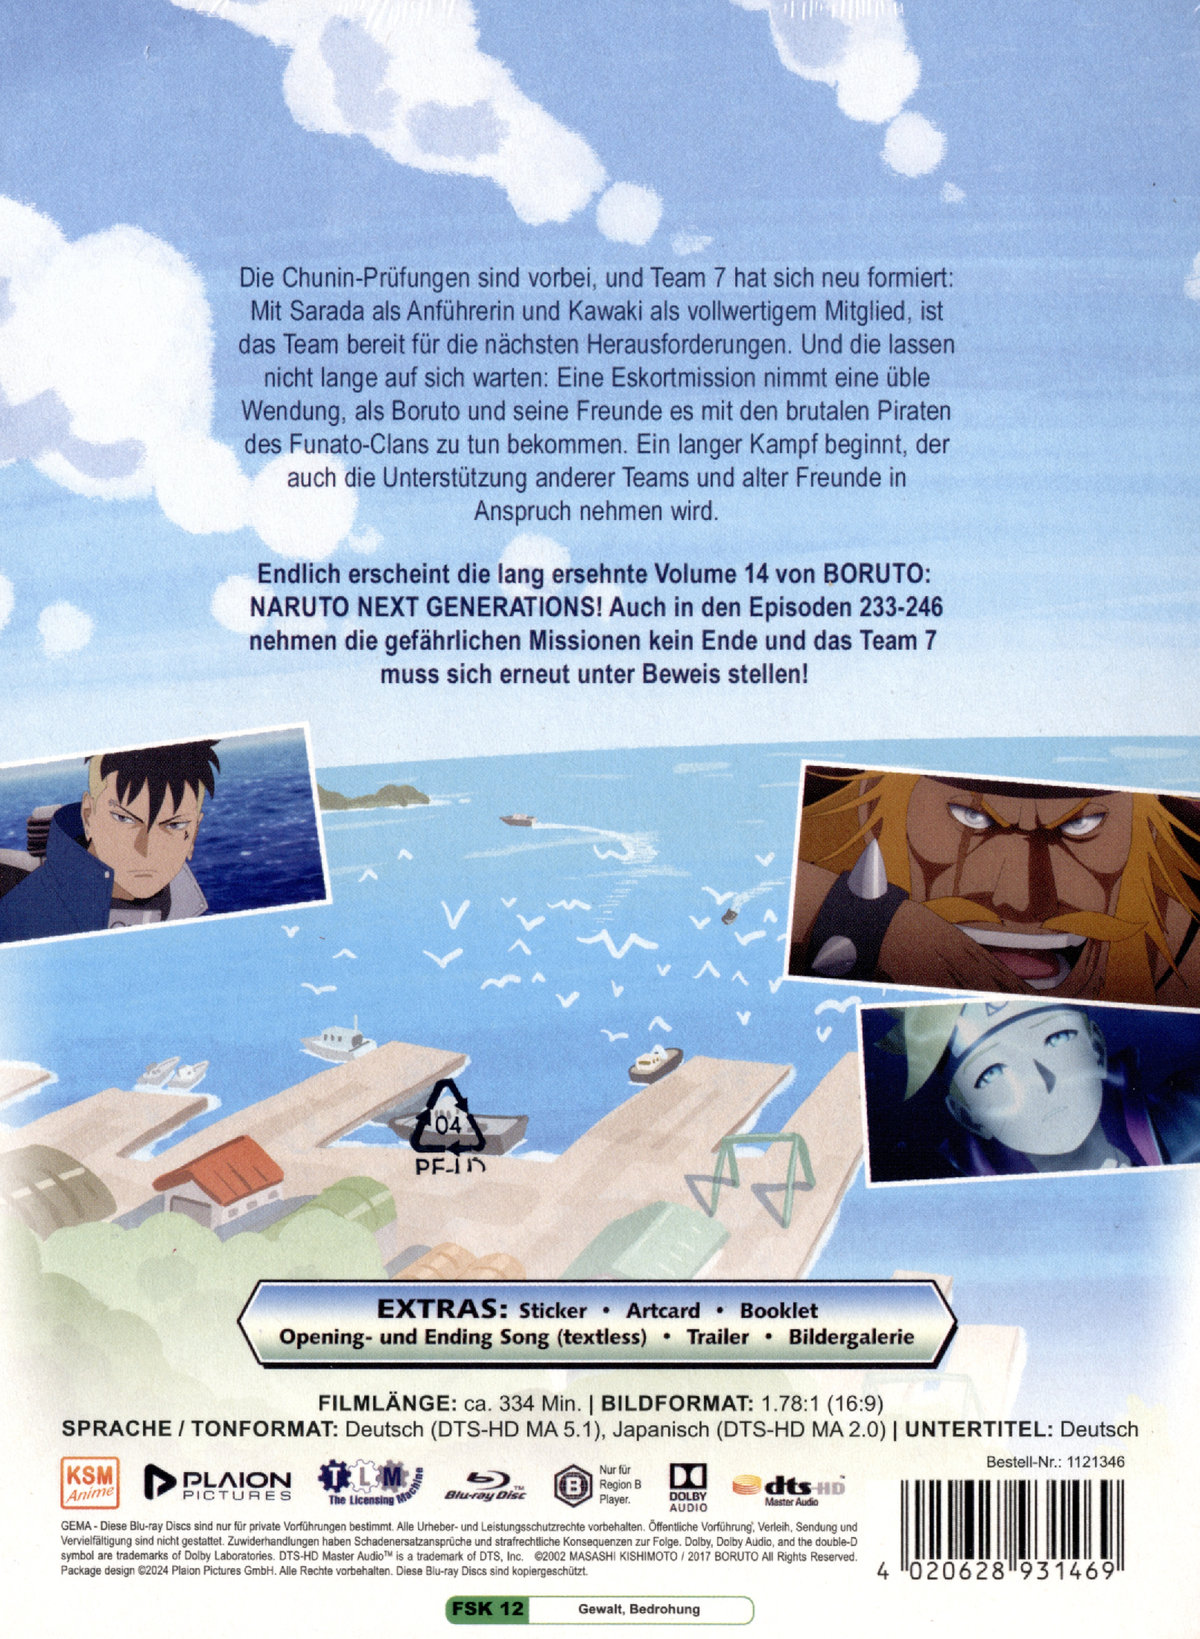 Boruto: Naruto Next Generations - Volume 14 (Ep. 233-246)  (Blu-ray Disc)